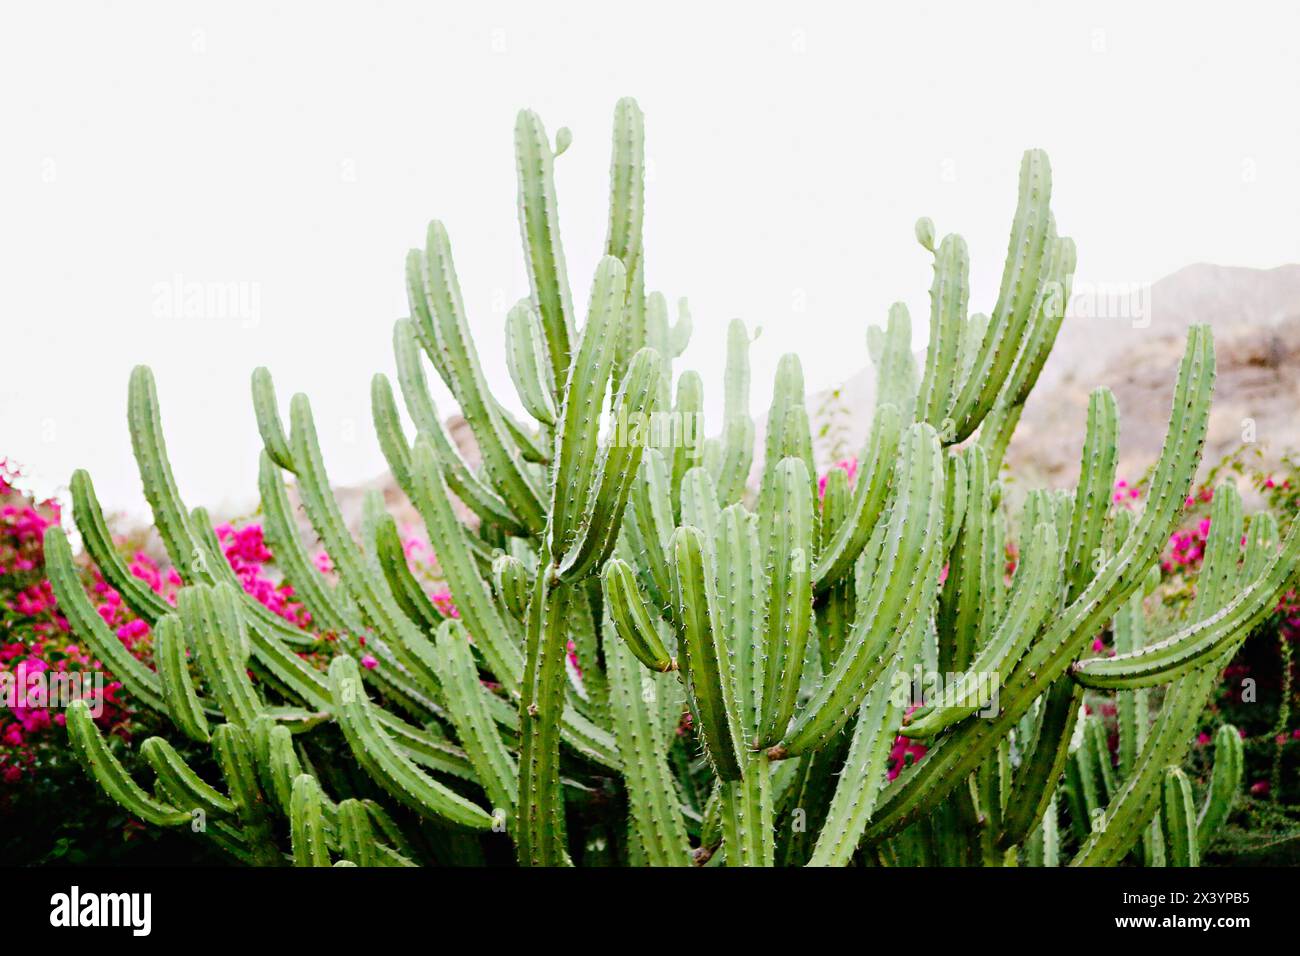 Lush cactus stands tall amidst vibrant bougainvillea. Stock Photo